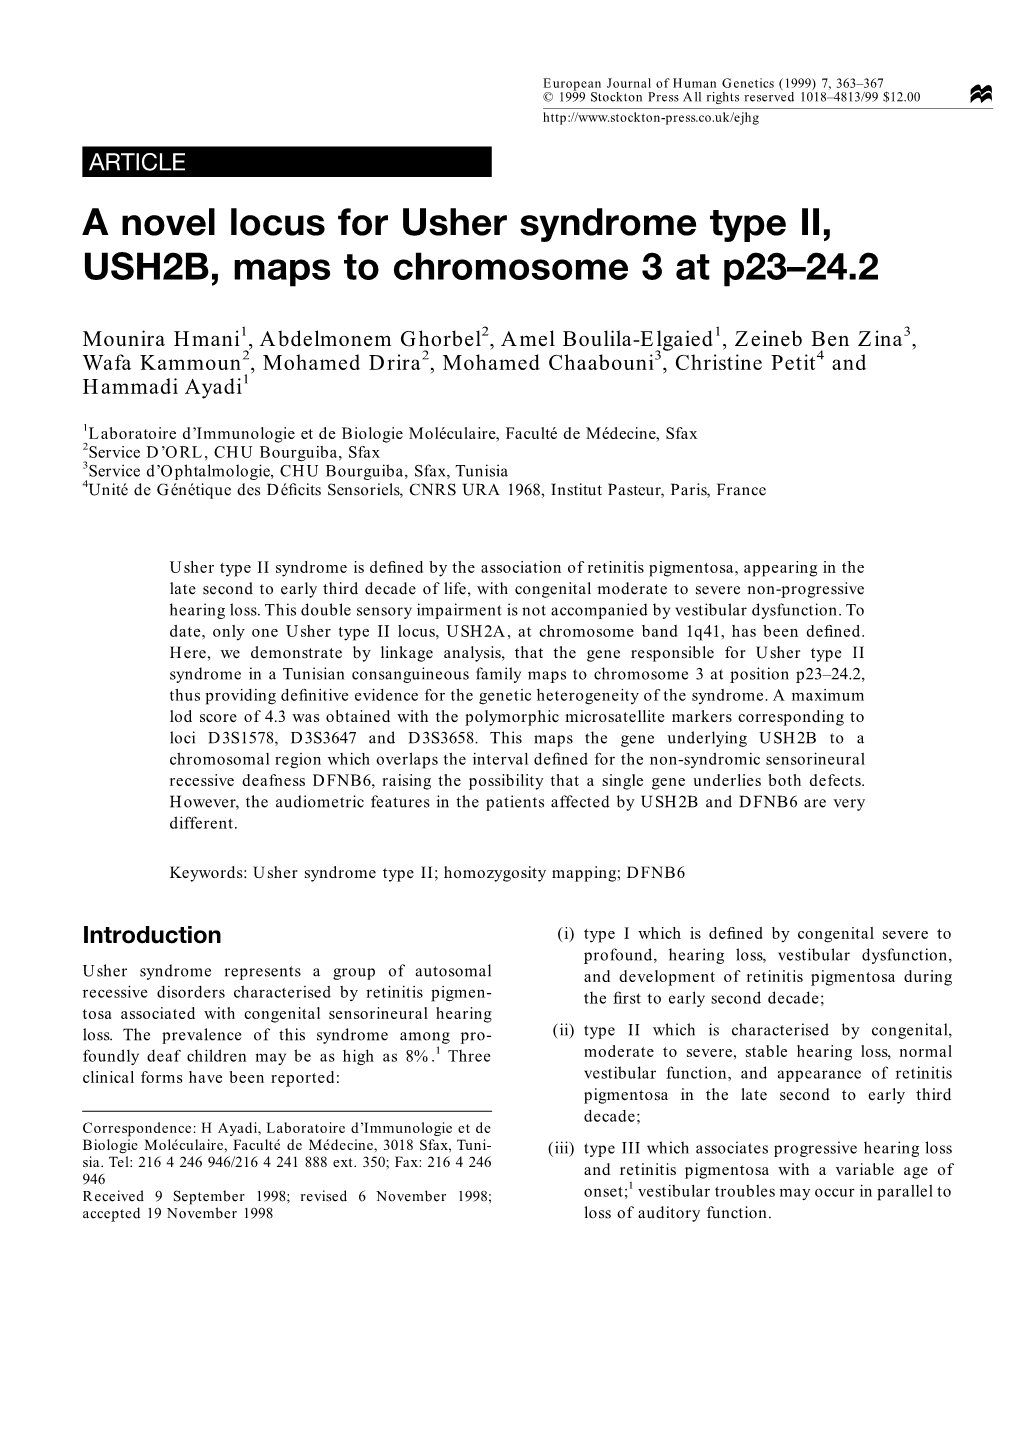 A Novel Locus for Usher Syndrome Type II, USH2B, Maps to Chromosome 3 at P23–24.2